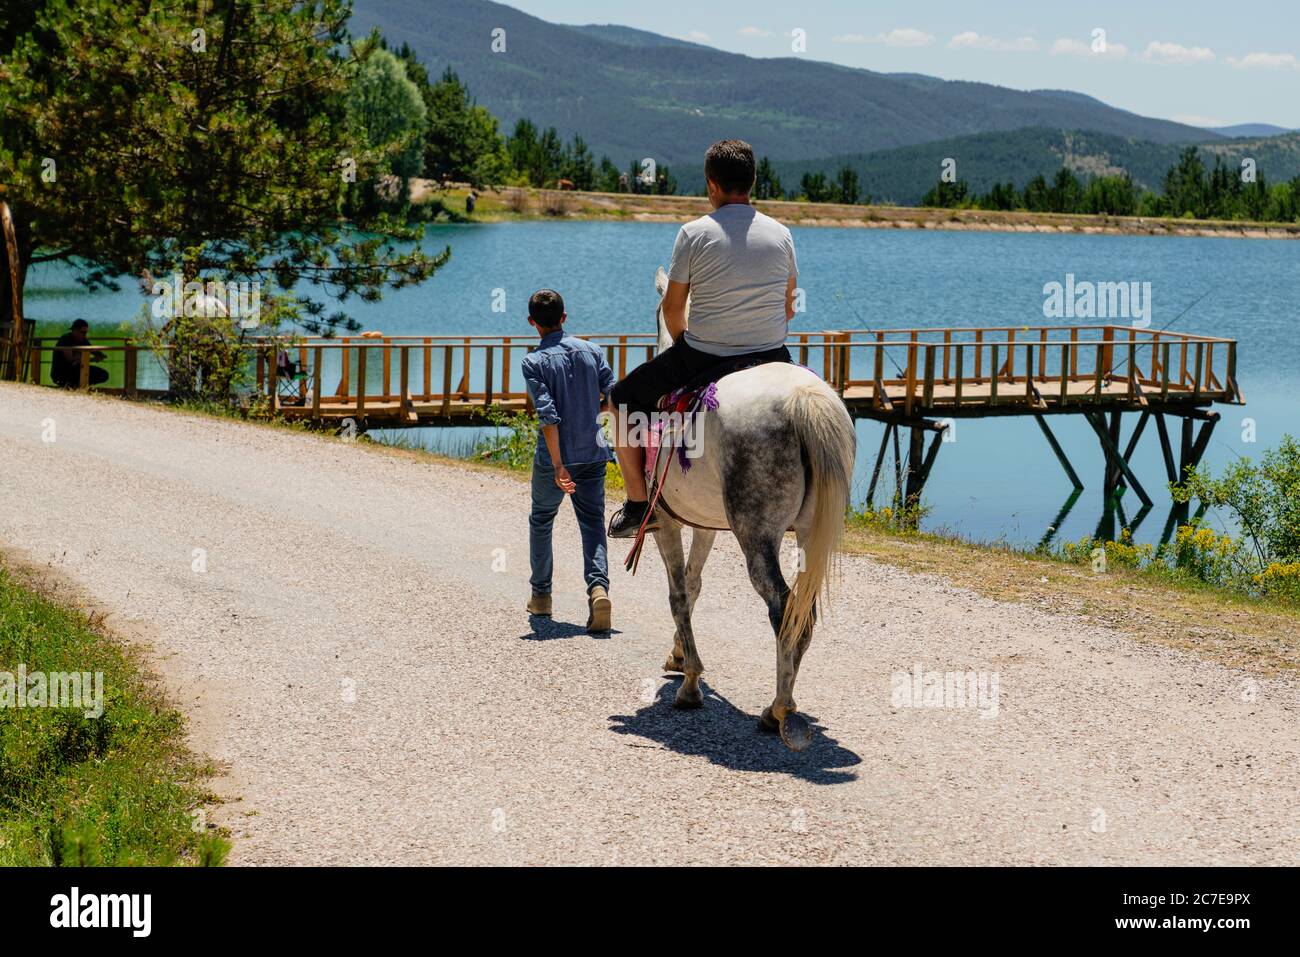 Horseback riding tourism near the lake Daday District, Kastamonu, Turkey. Stock Photo